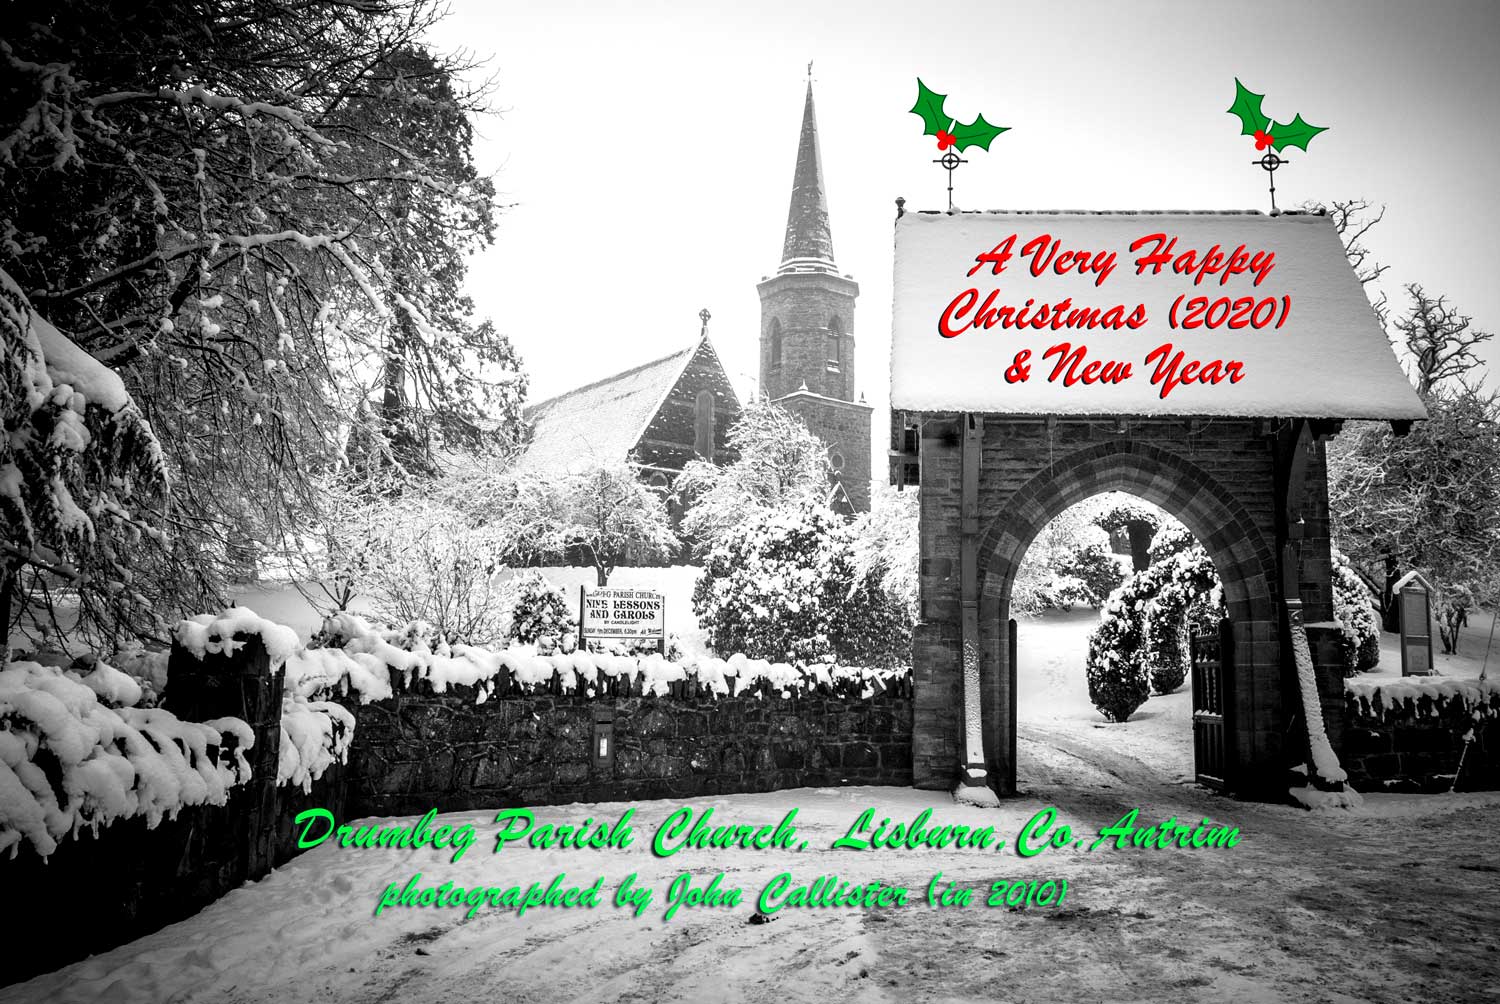 Just outside Lisburn town, Drumbeg, Church of Ireland. (Dec 2010)